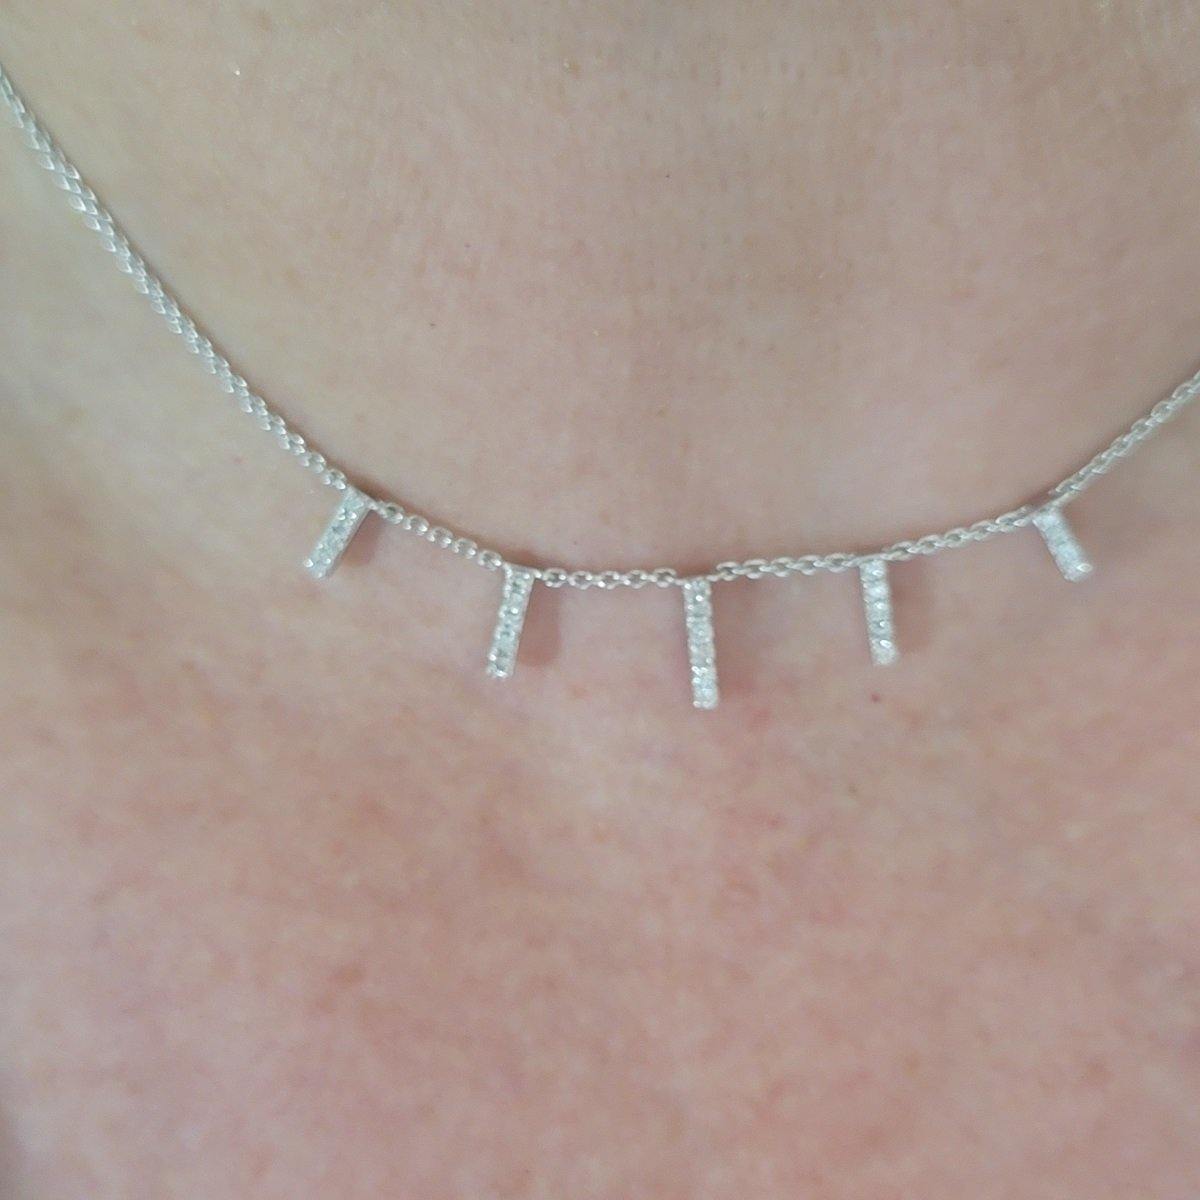 Fun Diamond Drop Bar Choker necklace in Sterling Silver - Peter's Vaults